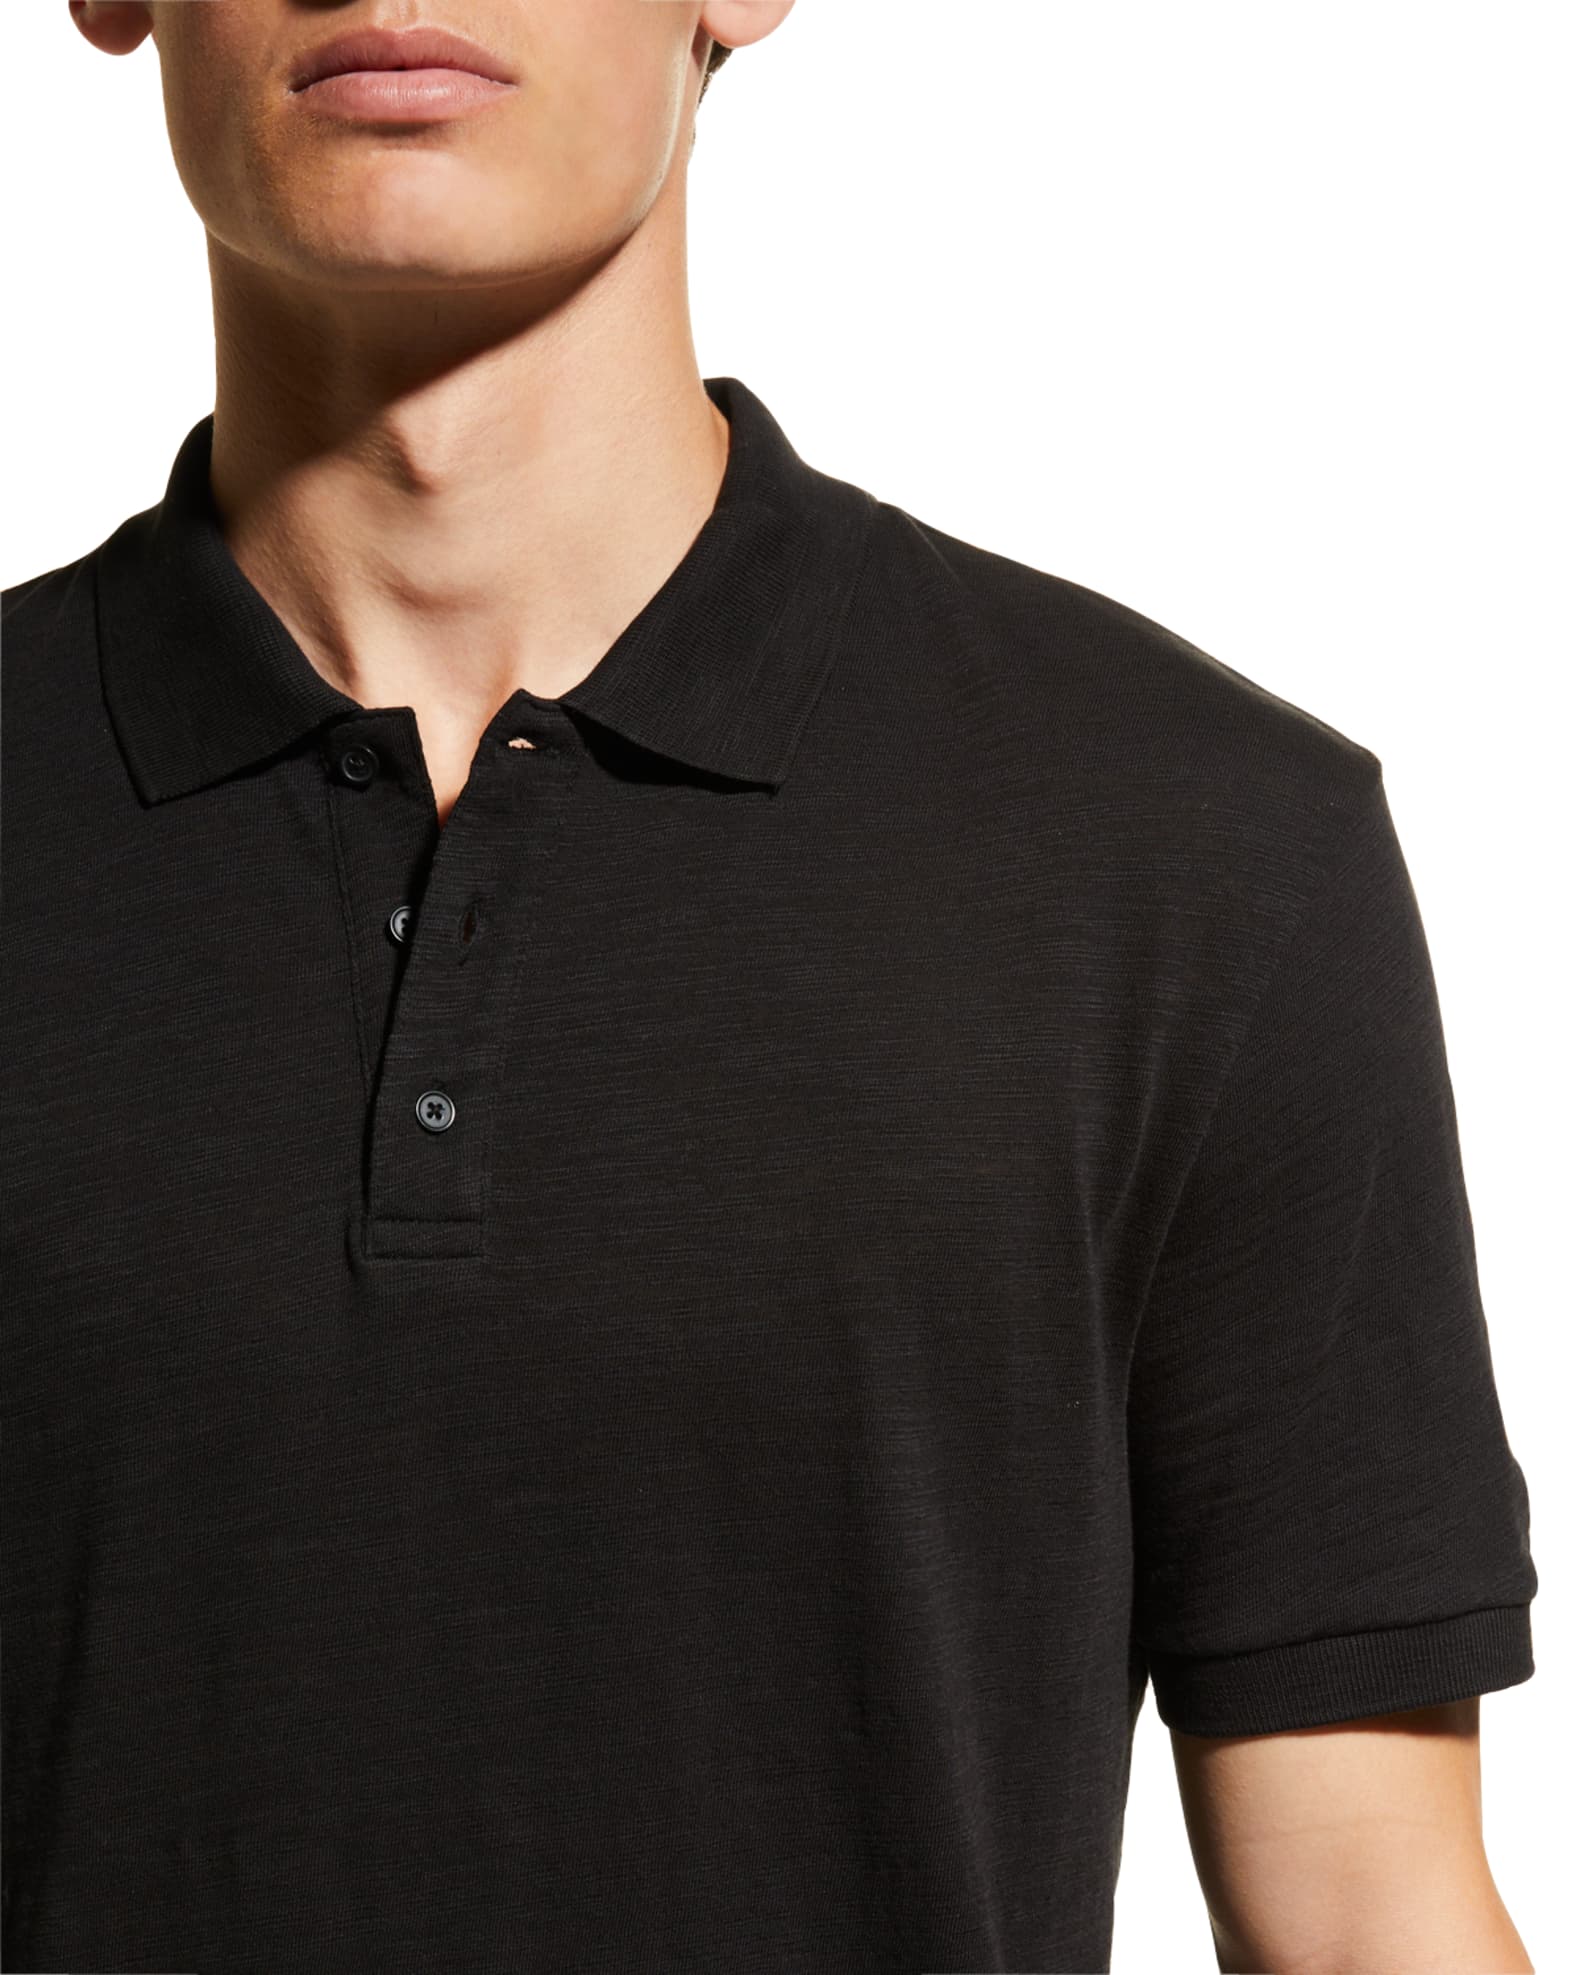 Louis Vuitton Classic Short Sleeve Pique Polo shirt black sz M